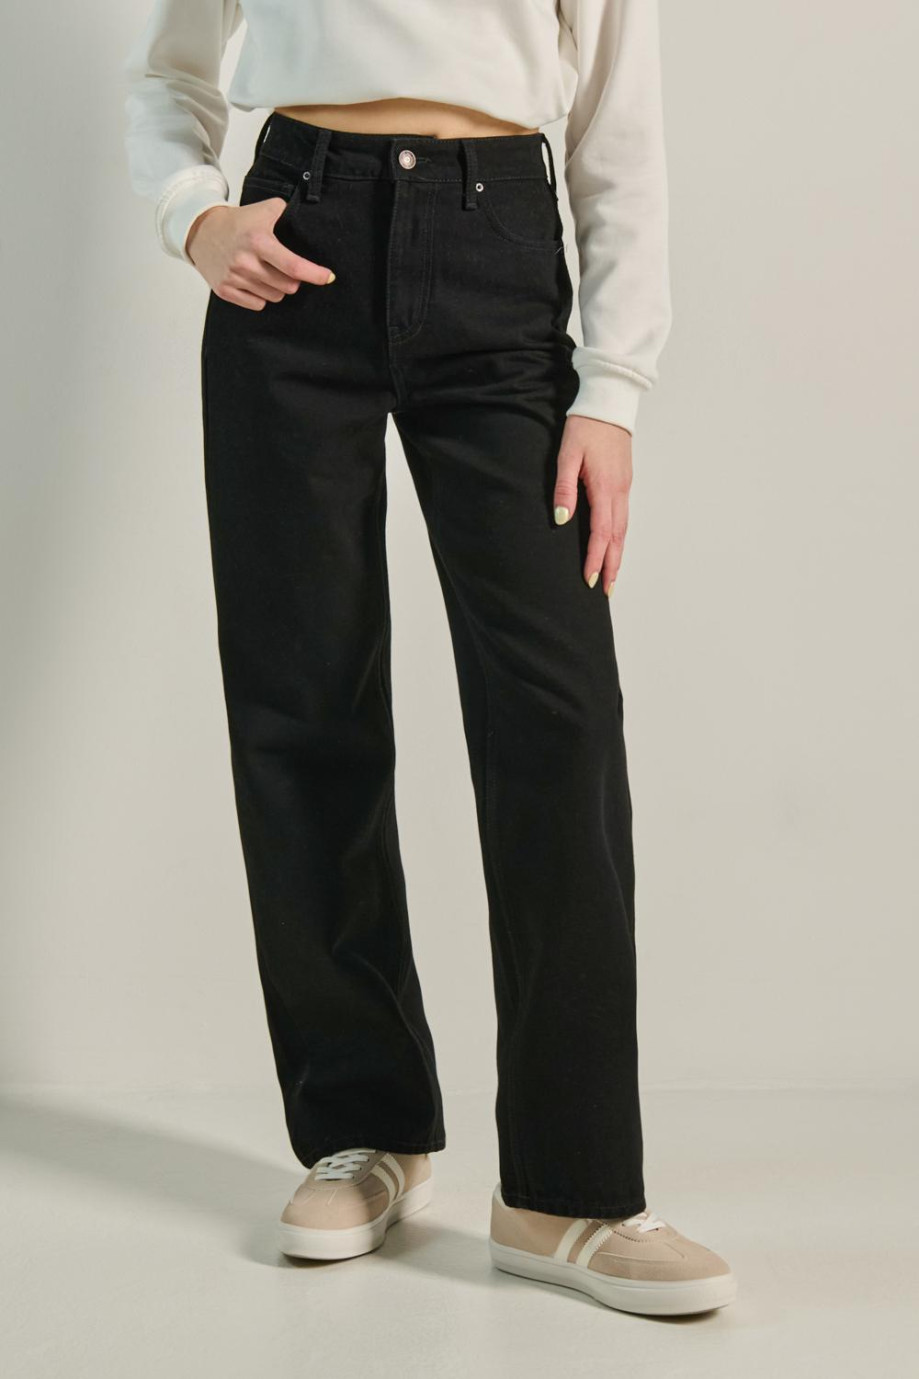 Jean tiro alto 90´S negro con bolsillos y bota recta